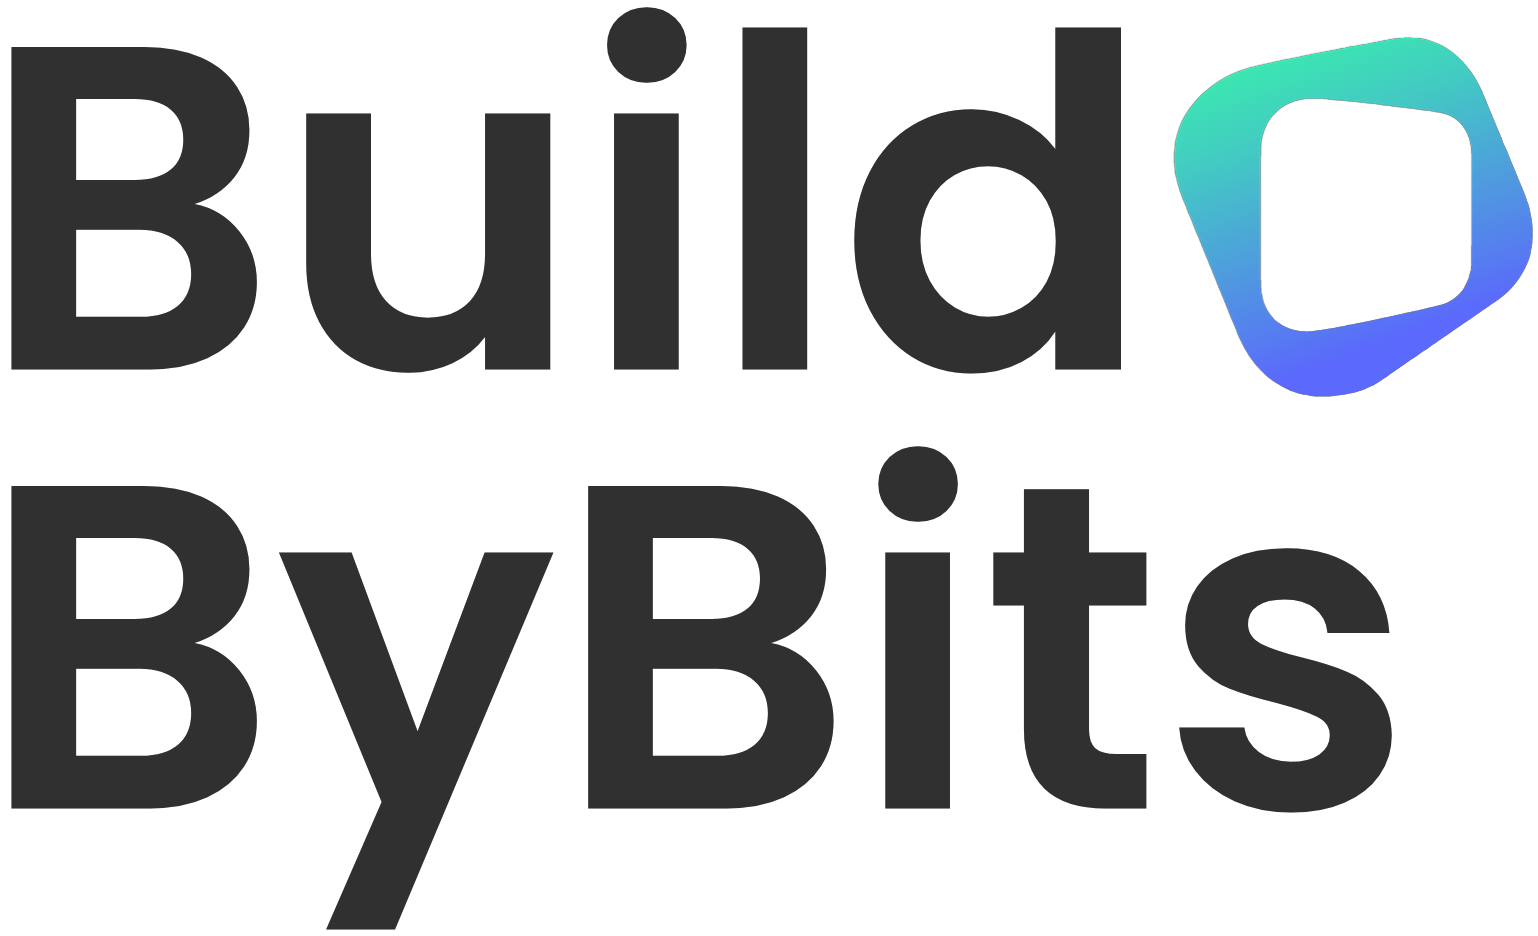 BuildByBits